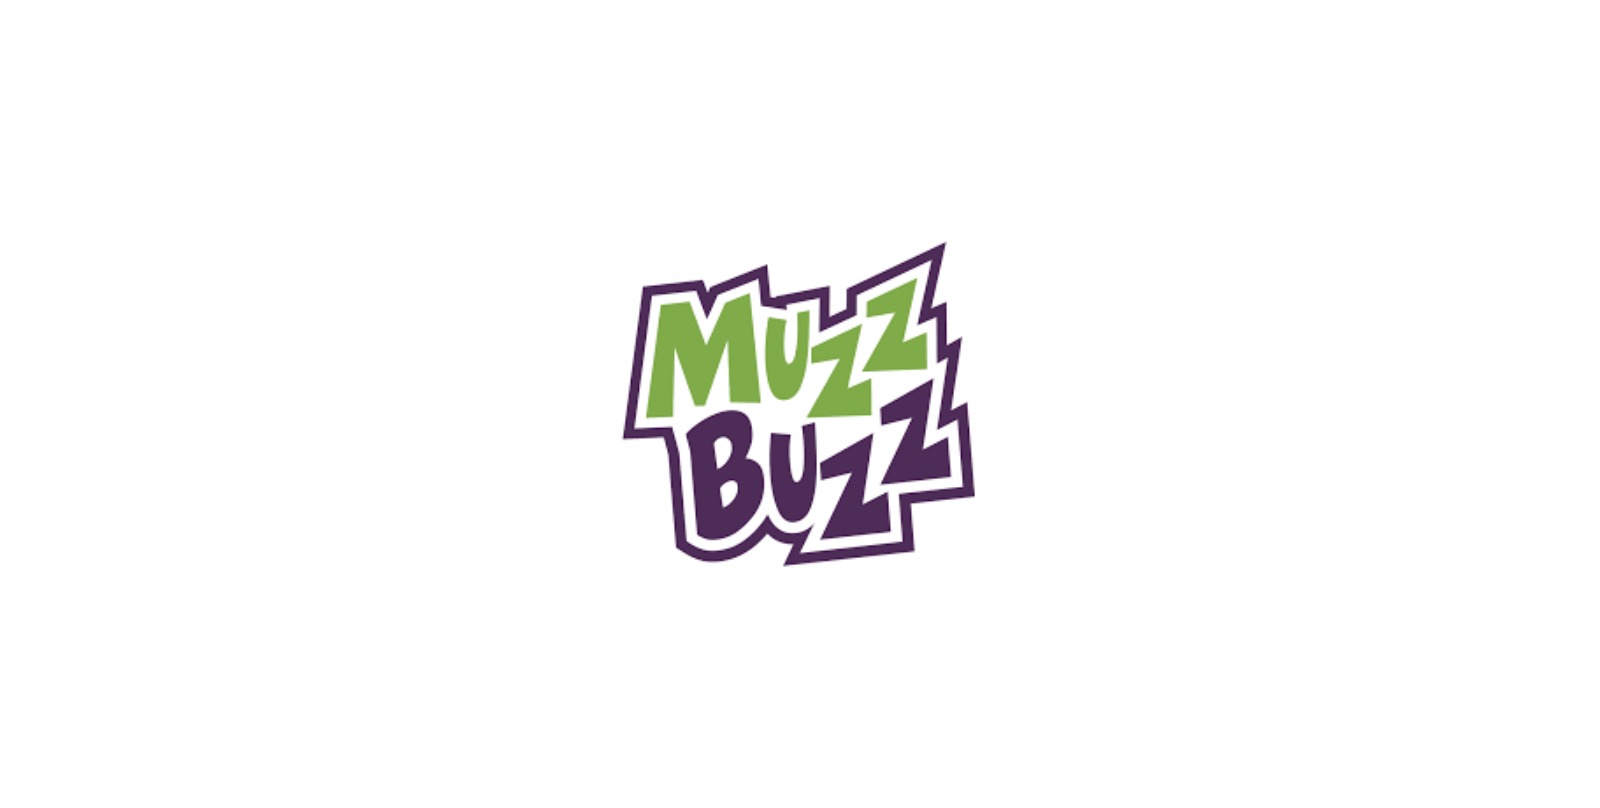 muzz buzz menu prices australia